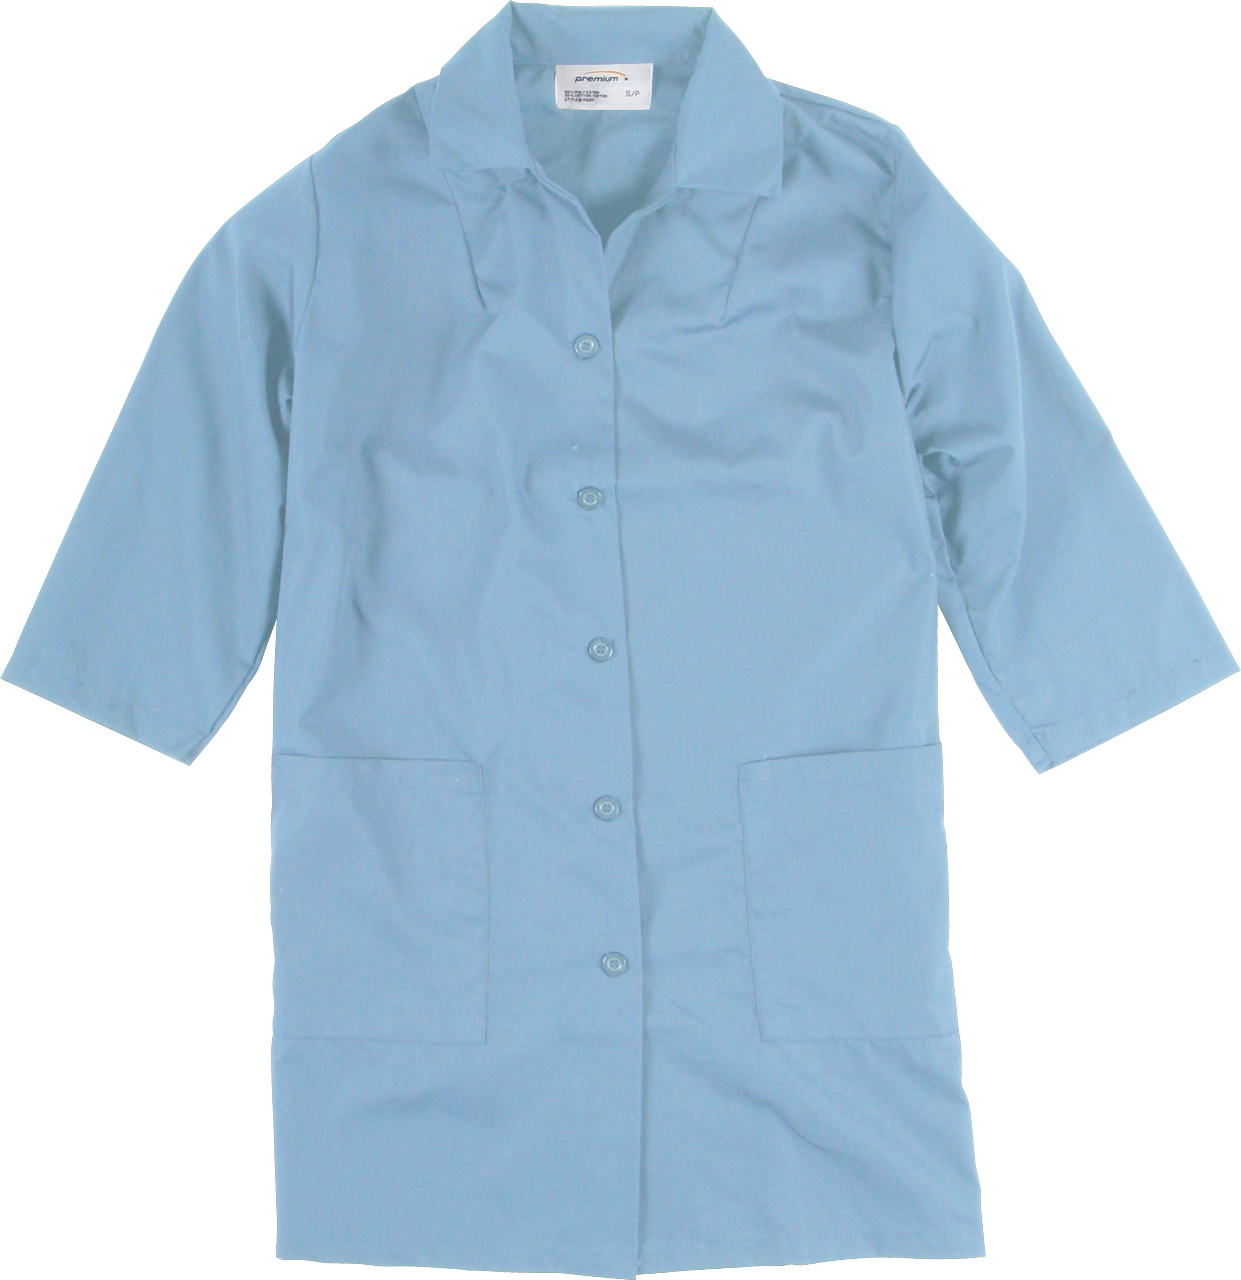 Picture of Premium Uniforms Women's 3/4 Sleeve Button Closure Smock